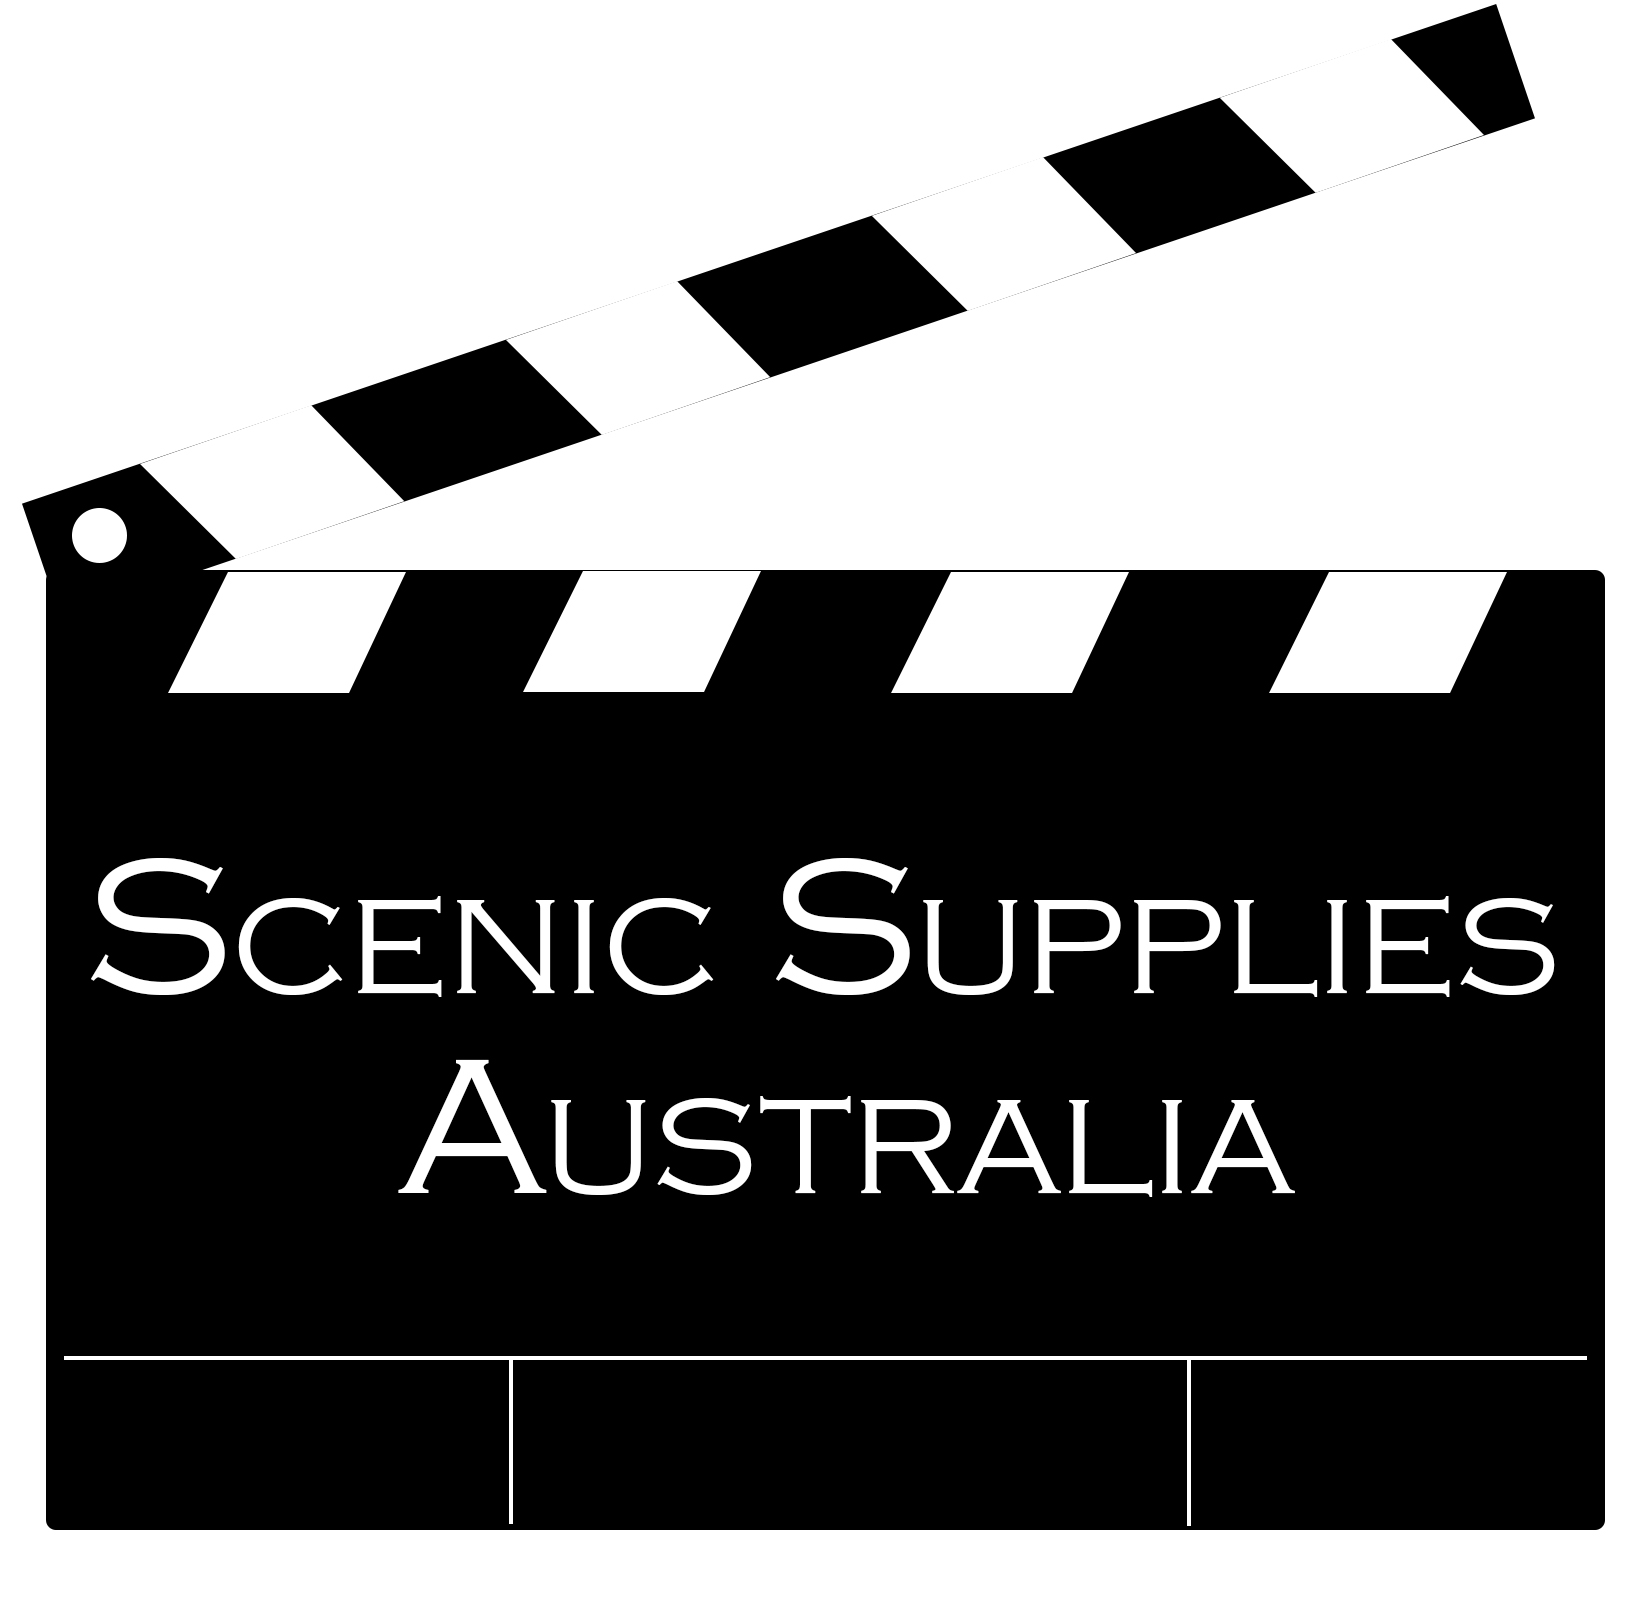 Scenic Supplies Australia